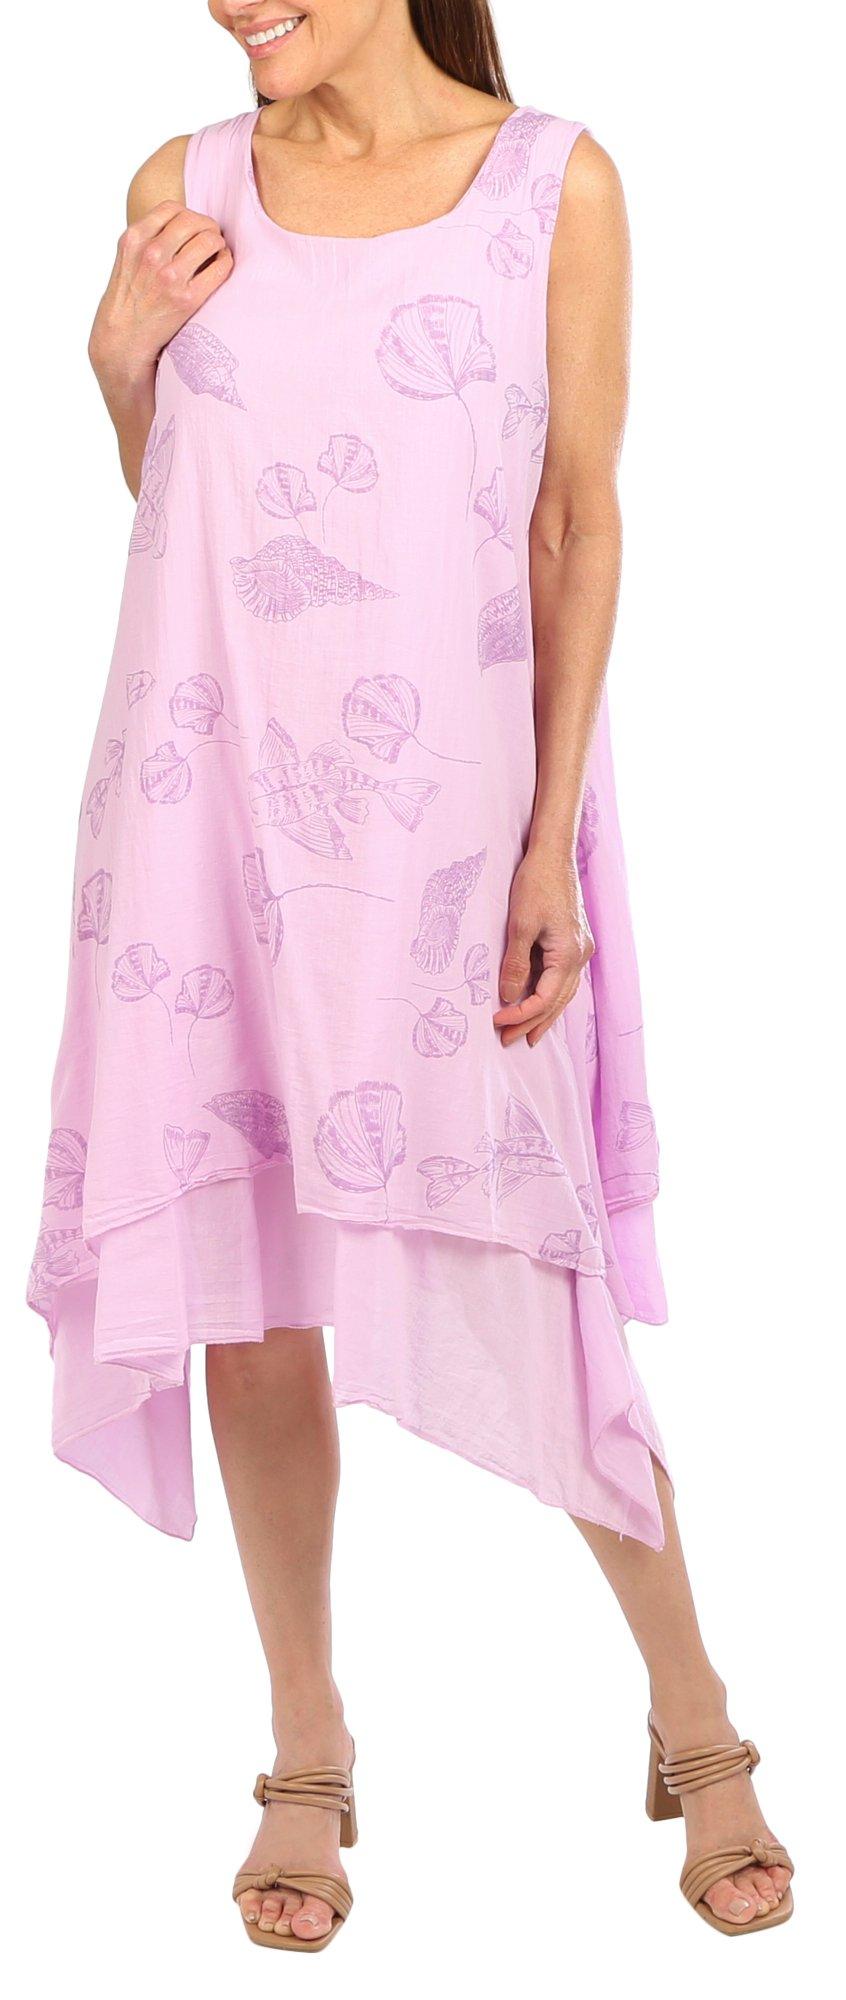 Womens Printed Sleeveless Dress